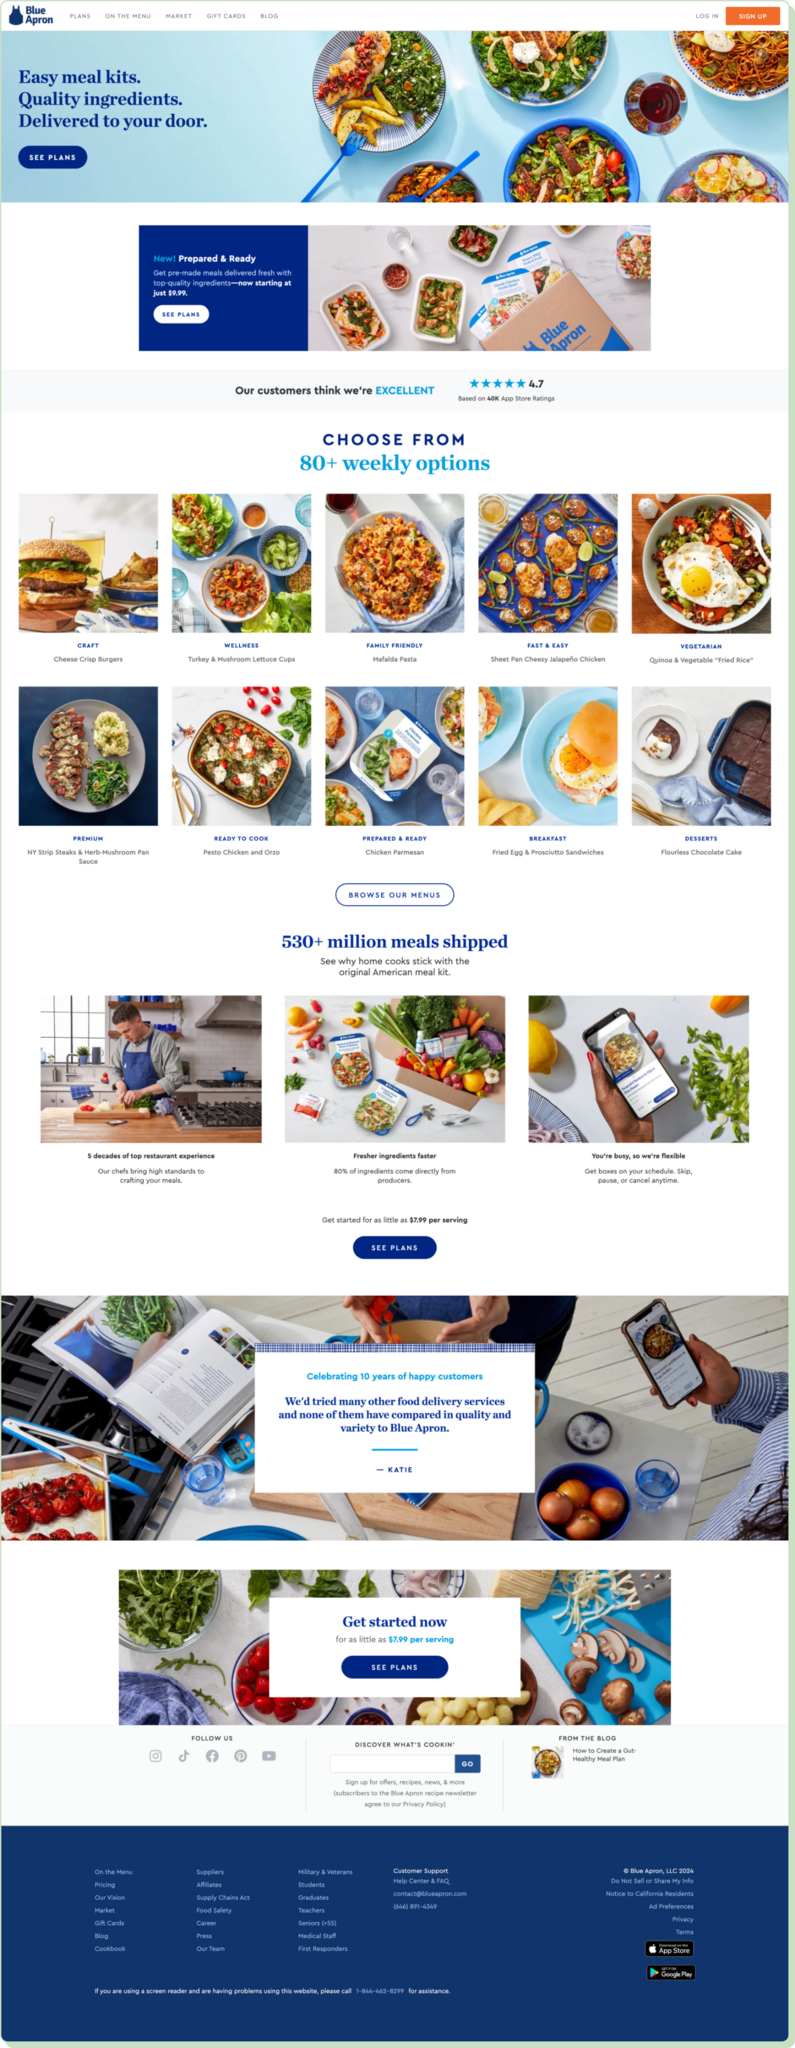 Blue Apron product landing page